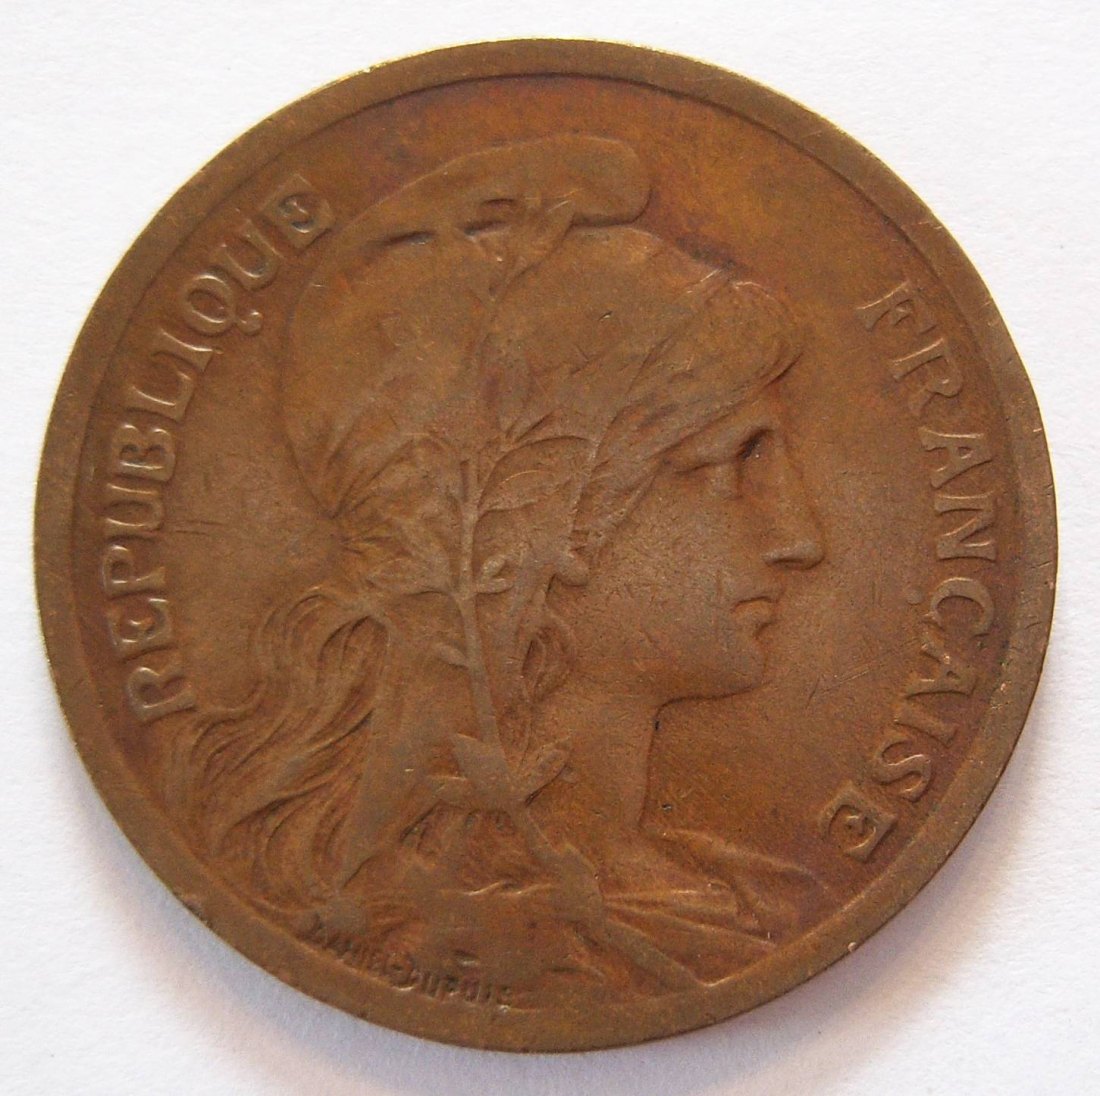  Frankreich 10 Centimes 1917   